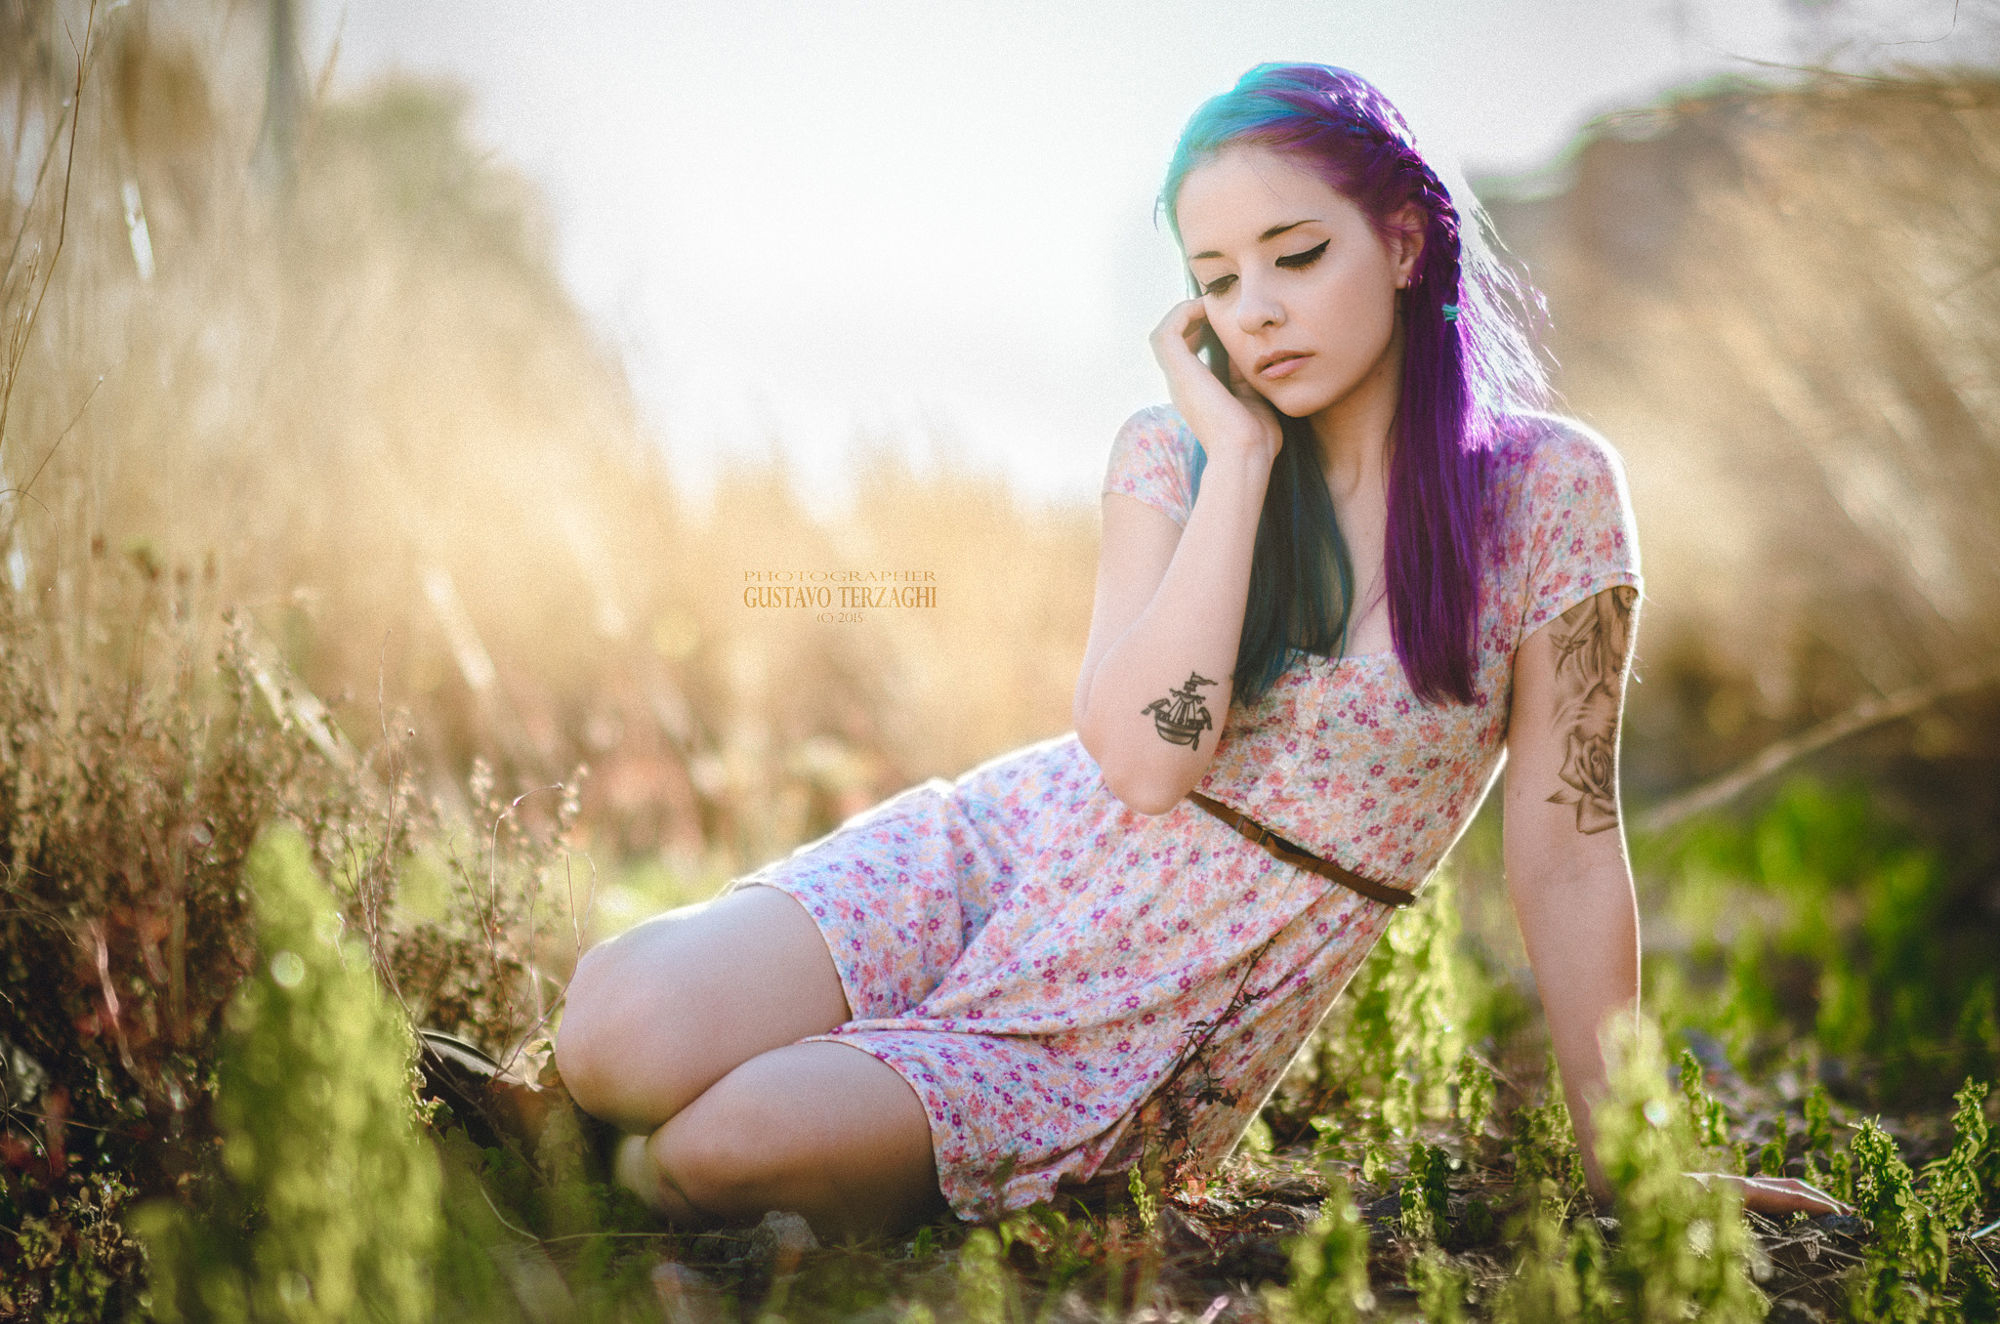 Gustavo Terzaghi Women Purple Hair Blue Hair Dress Tattoo Flower Dress Grass Sun Pierced Nose Closed 2000x1324